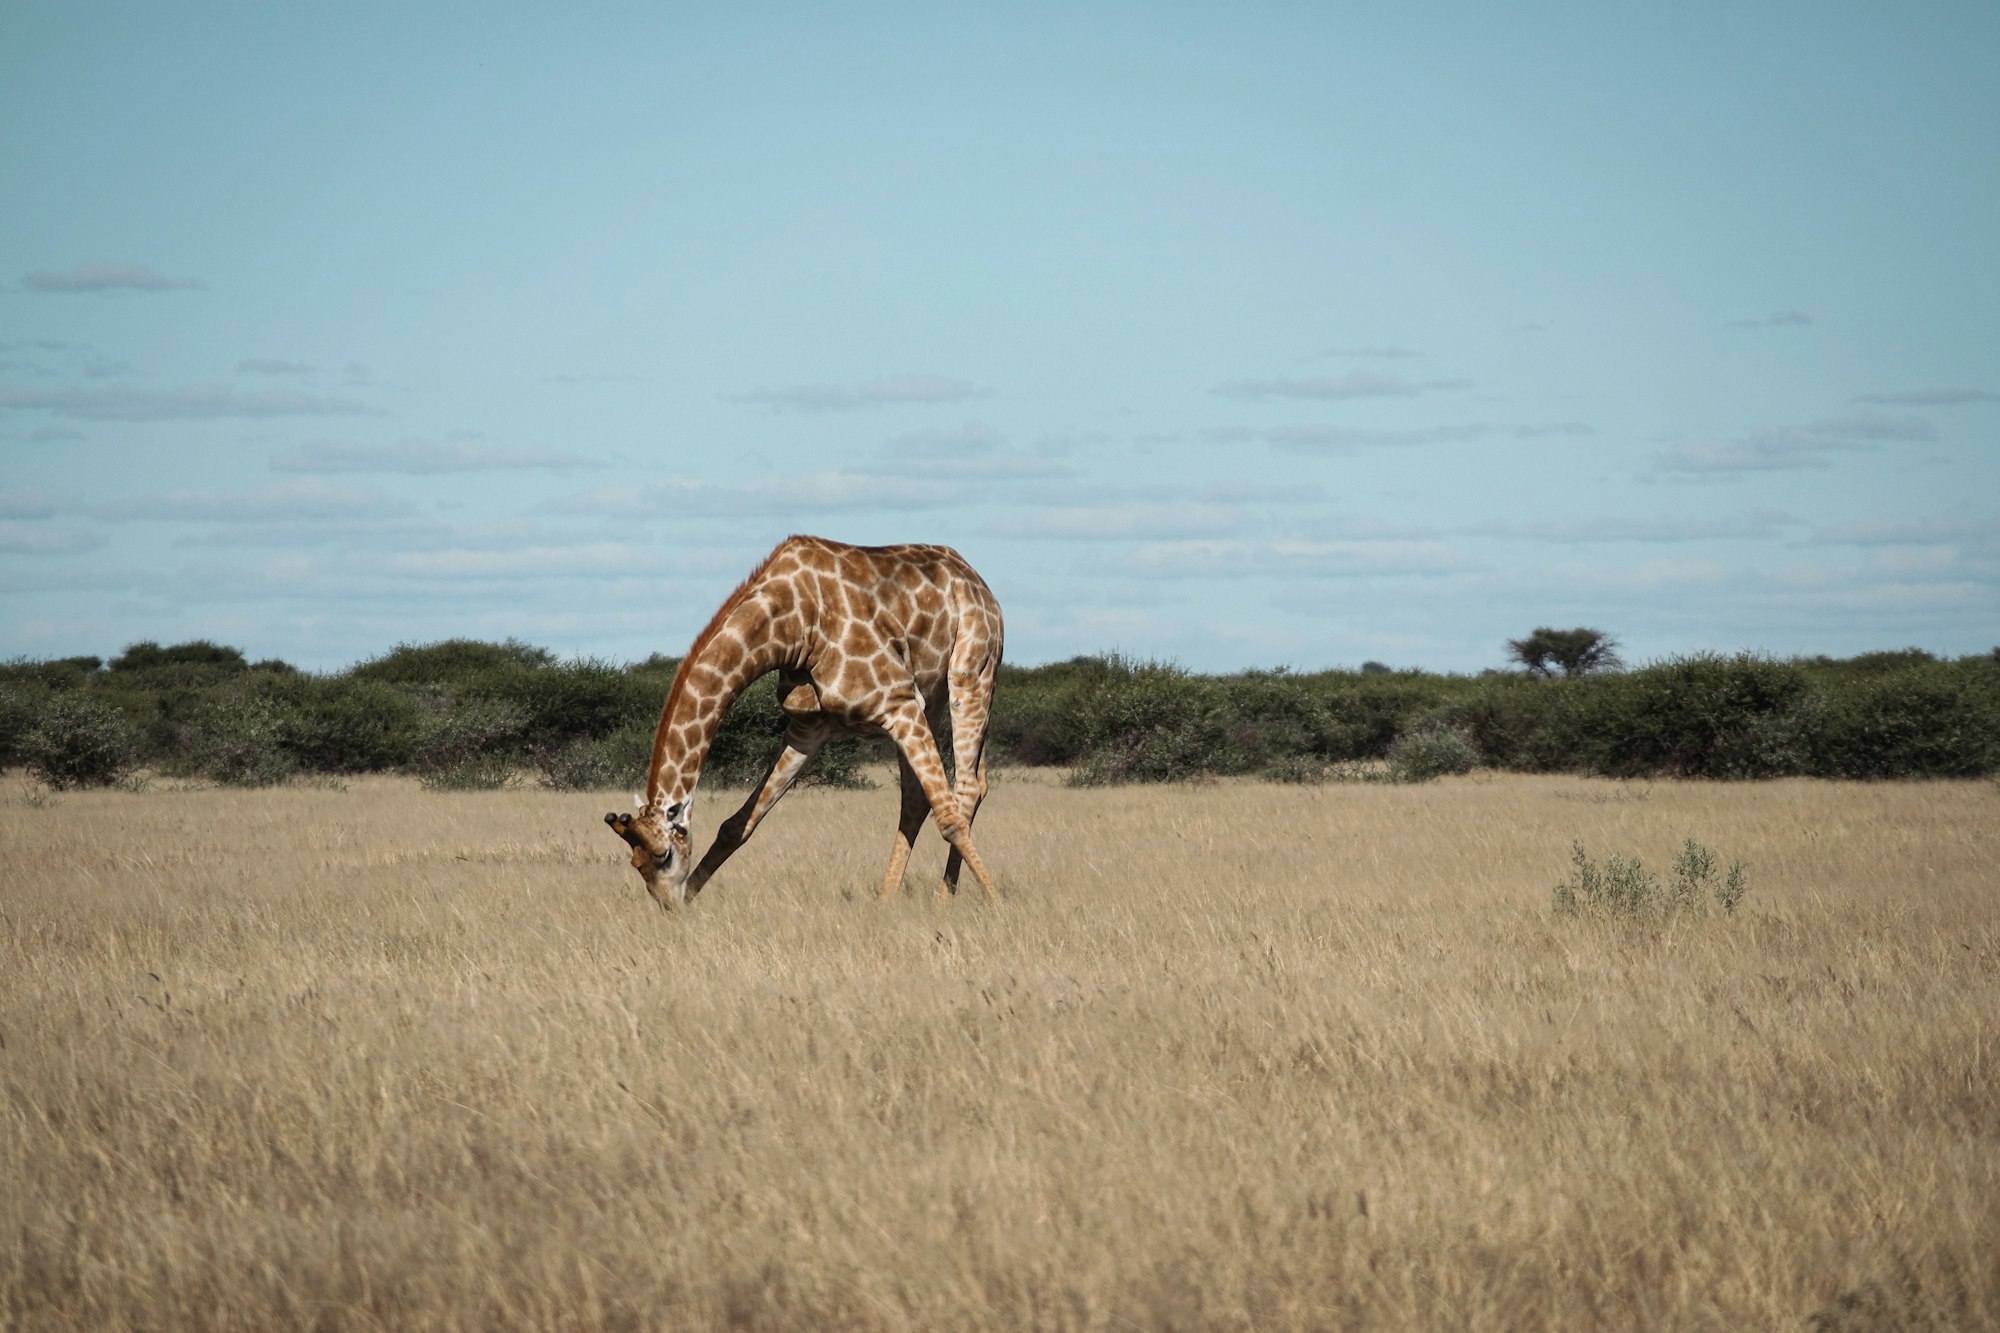 A Giraffe eats from the ground in the Central Kalahari Desert, Botswana